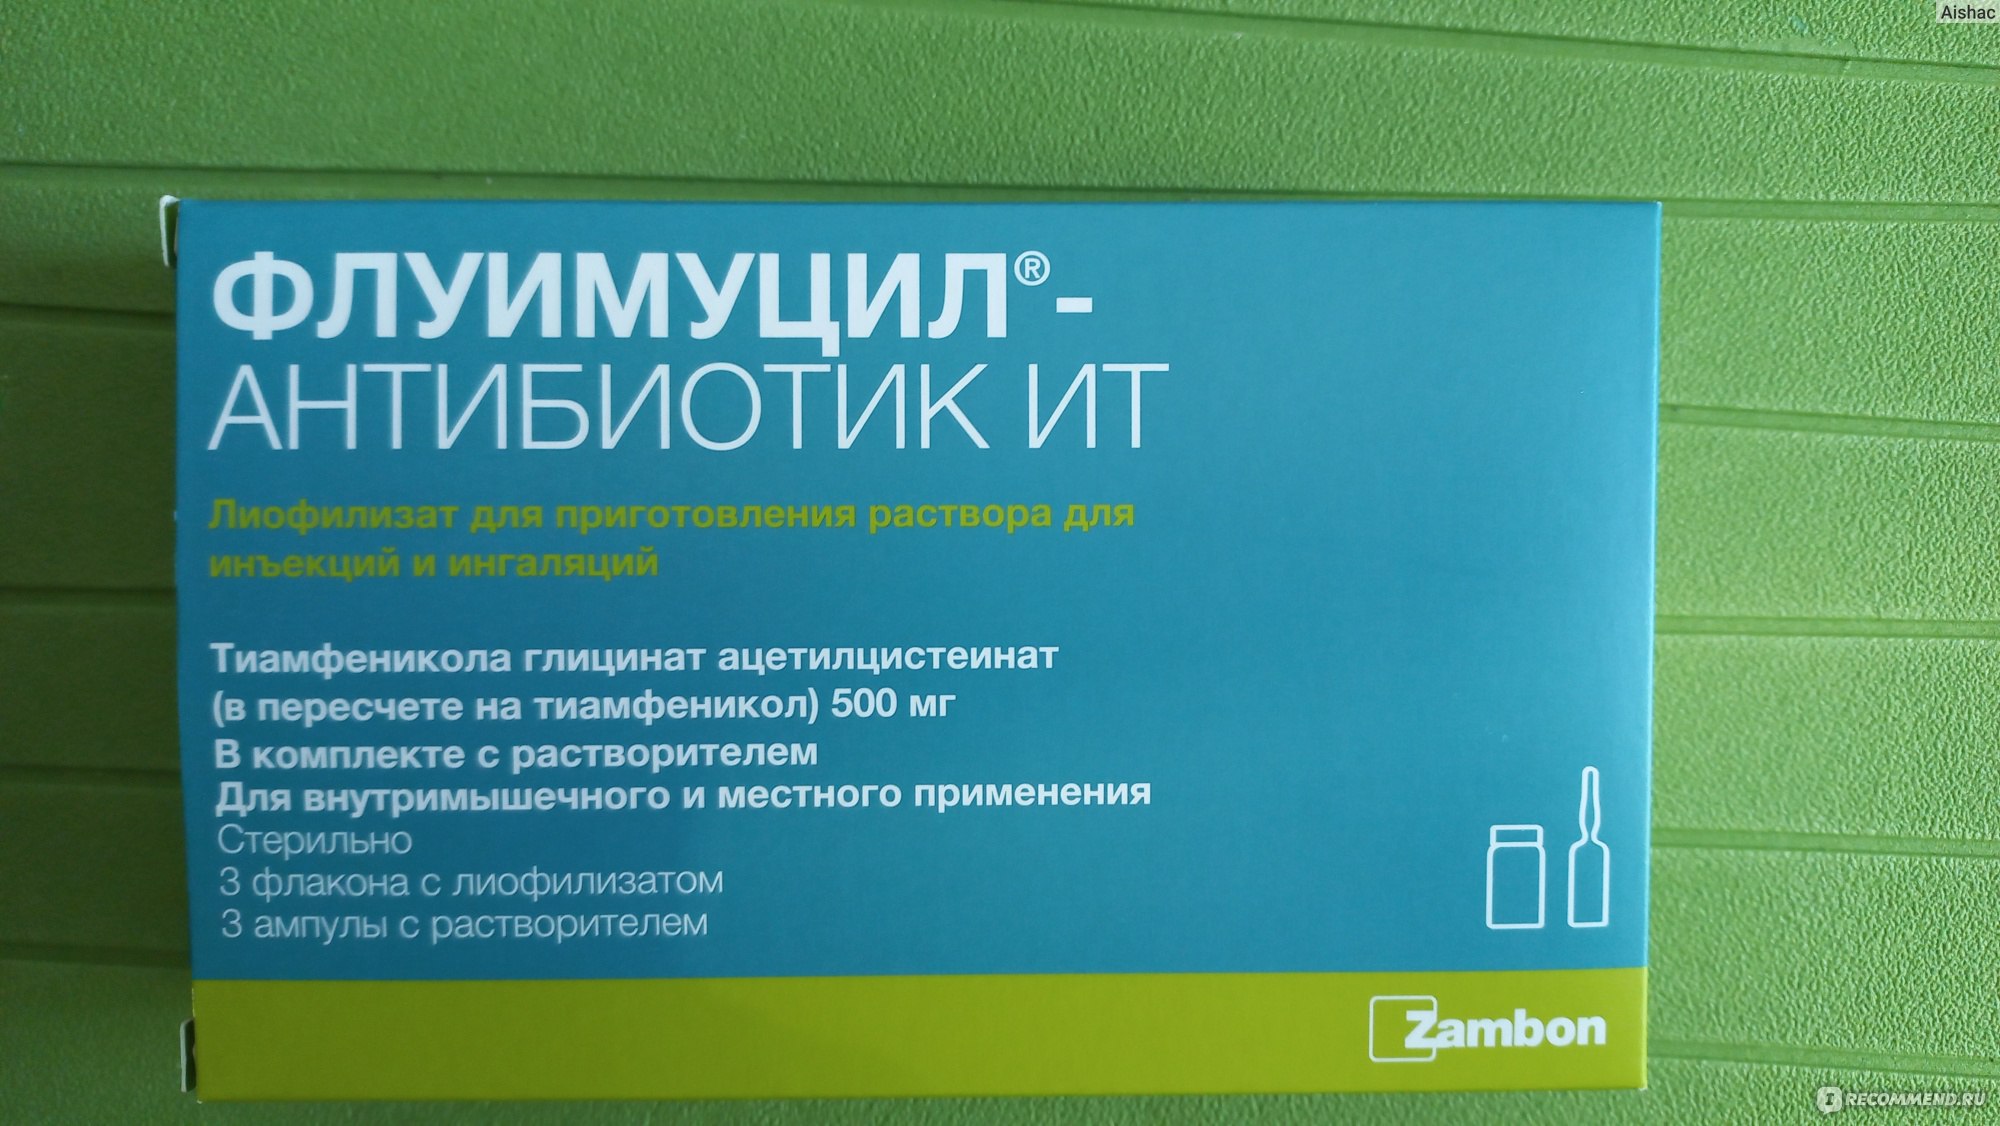 Флуимуцил антибиотик раствор купить. Флуимуцил-антибиотик для ингаляций. Флуимуцил-антибиотик порошок. Флуимуцил-антибиотик ИТ лиофилизат. Флуимуцил-антибиотик ИТ 125 мг для ингаляций.